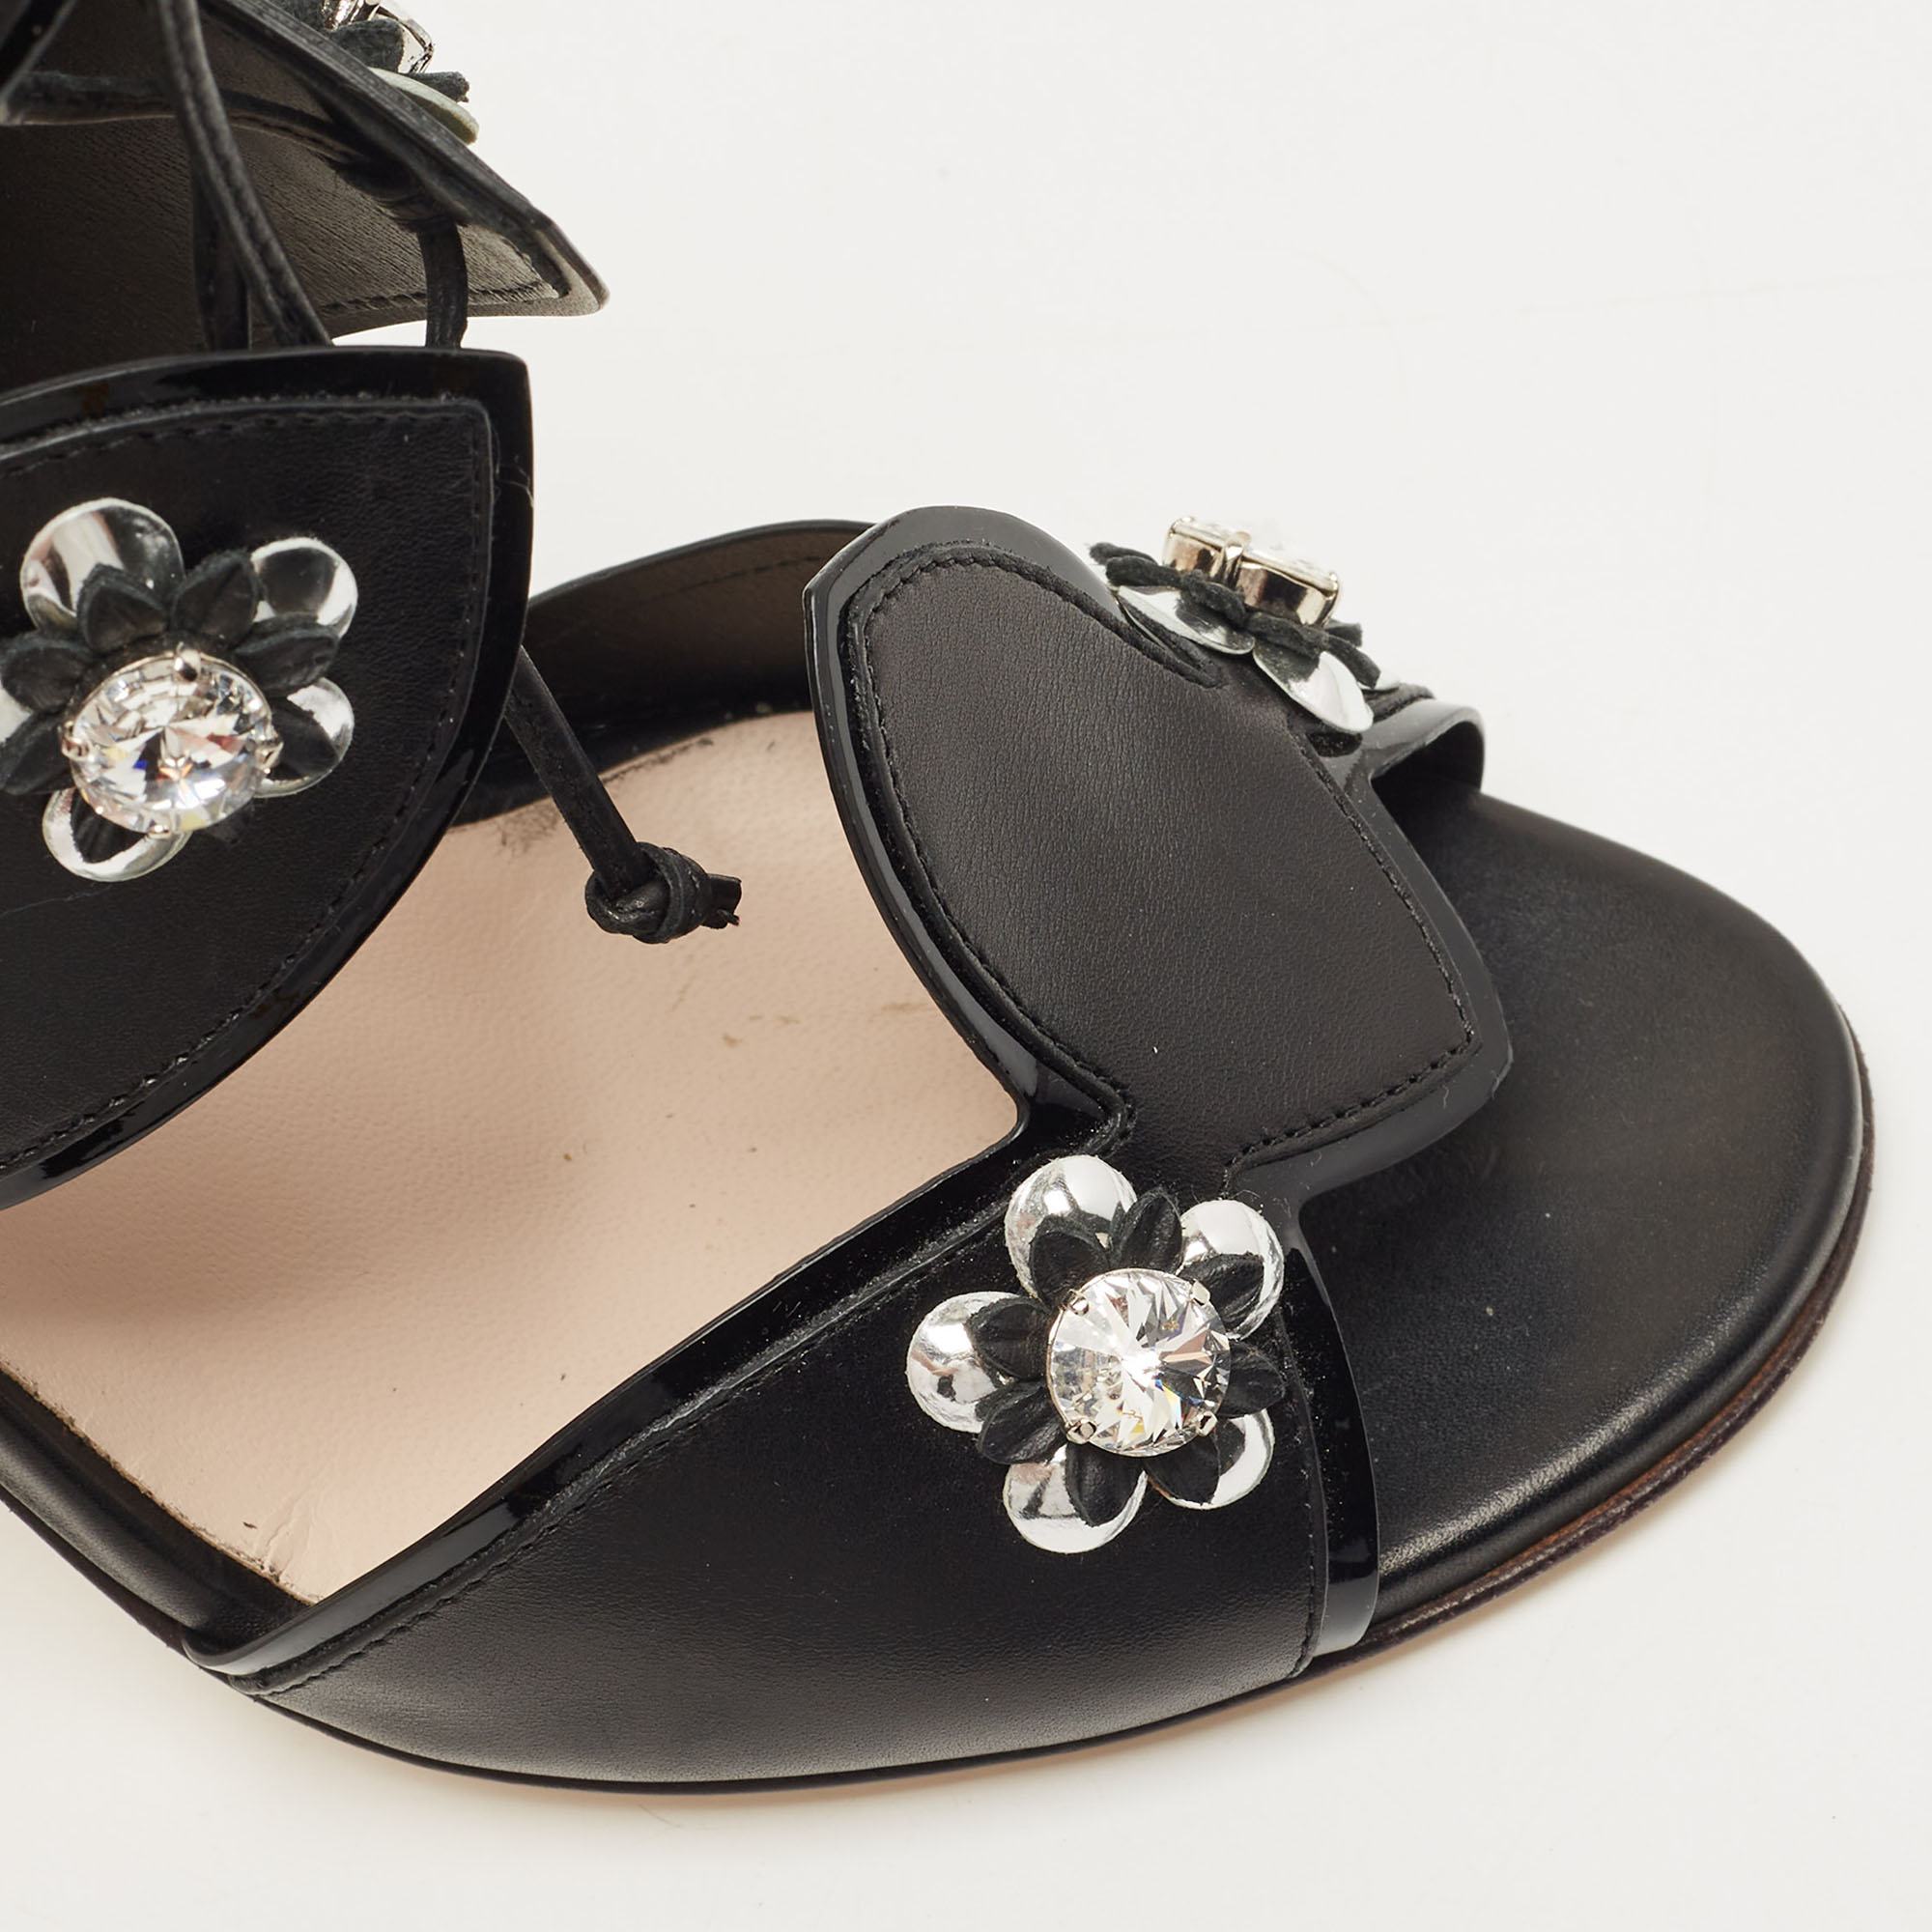 Fendi Black Leather Flowerland Embellished Sandals Size 39